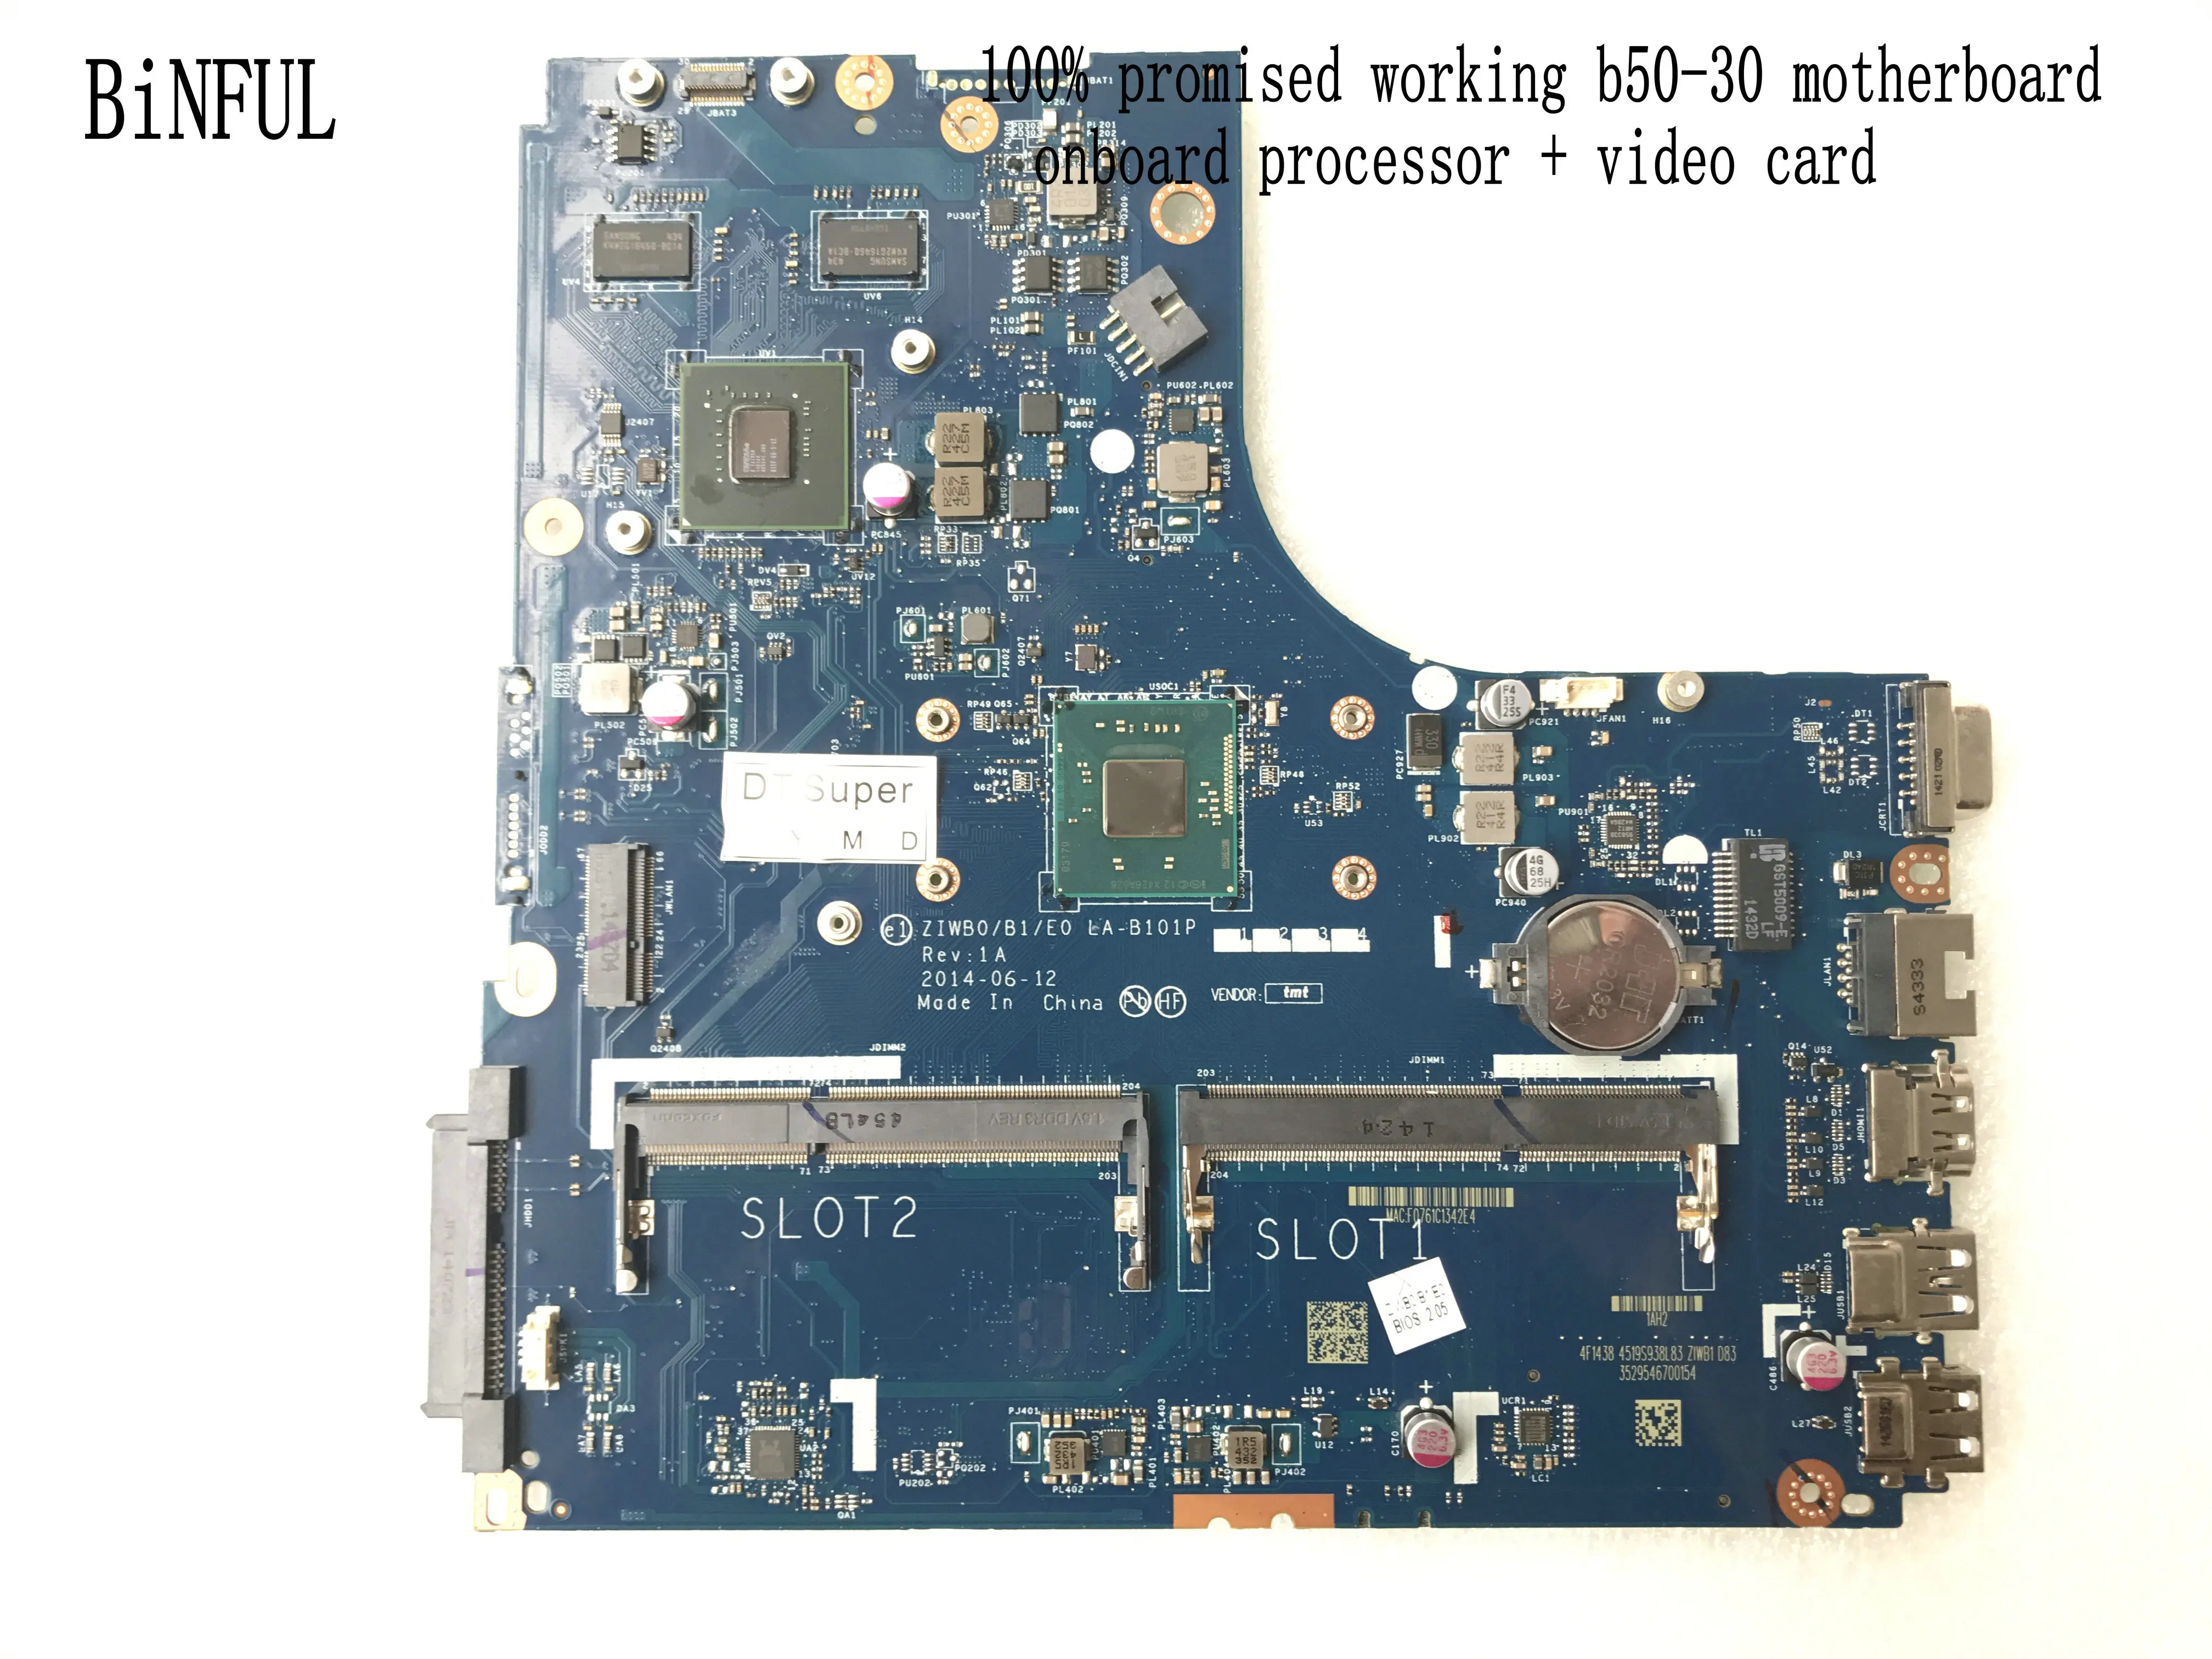 AVAILABLE  ZIWB0/B1/E0 LA-B101P MOTHERBOARD FOR LENOVO B50-30 B51-30 MAIN BOARD CPU N3050 / N3060 +920M 90 DAYS WARRANTY